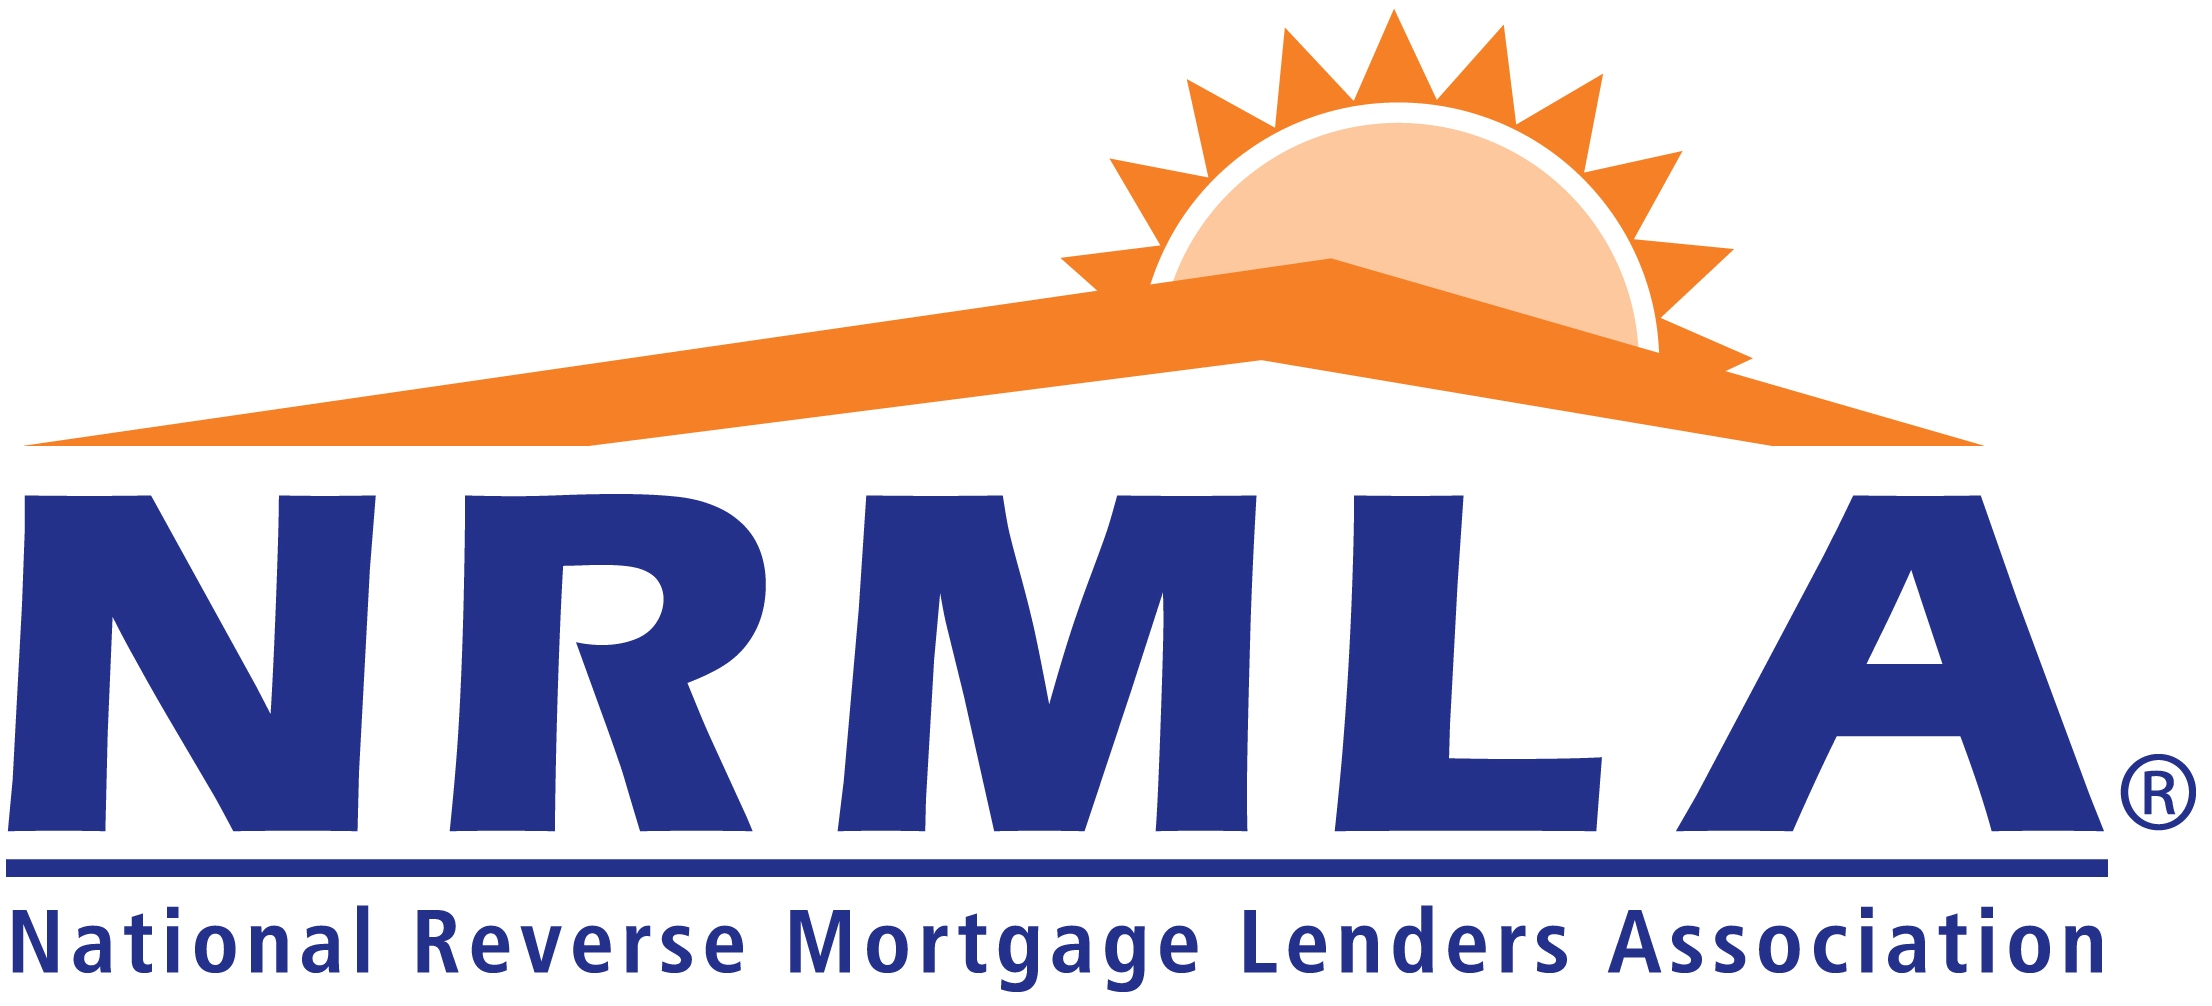 National Reverse Mortgage Lenders Association Member